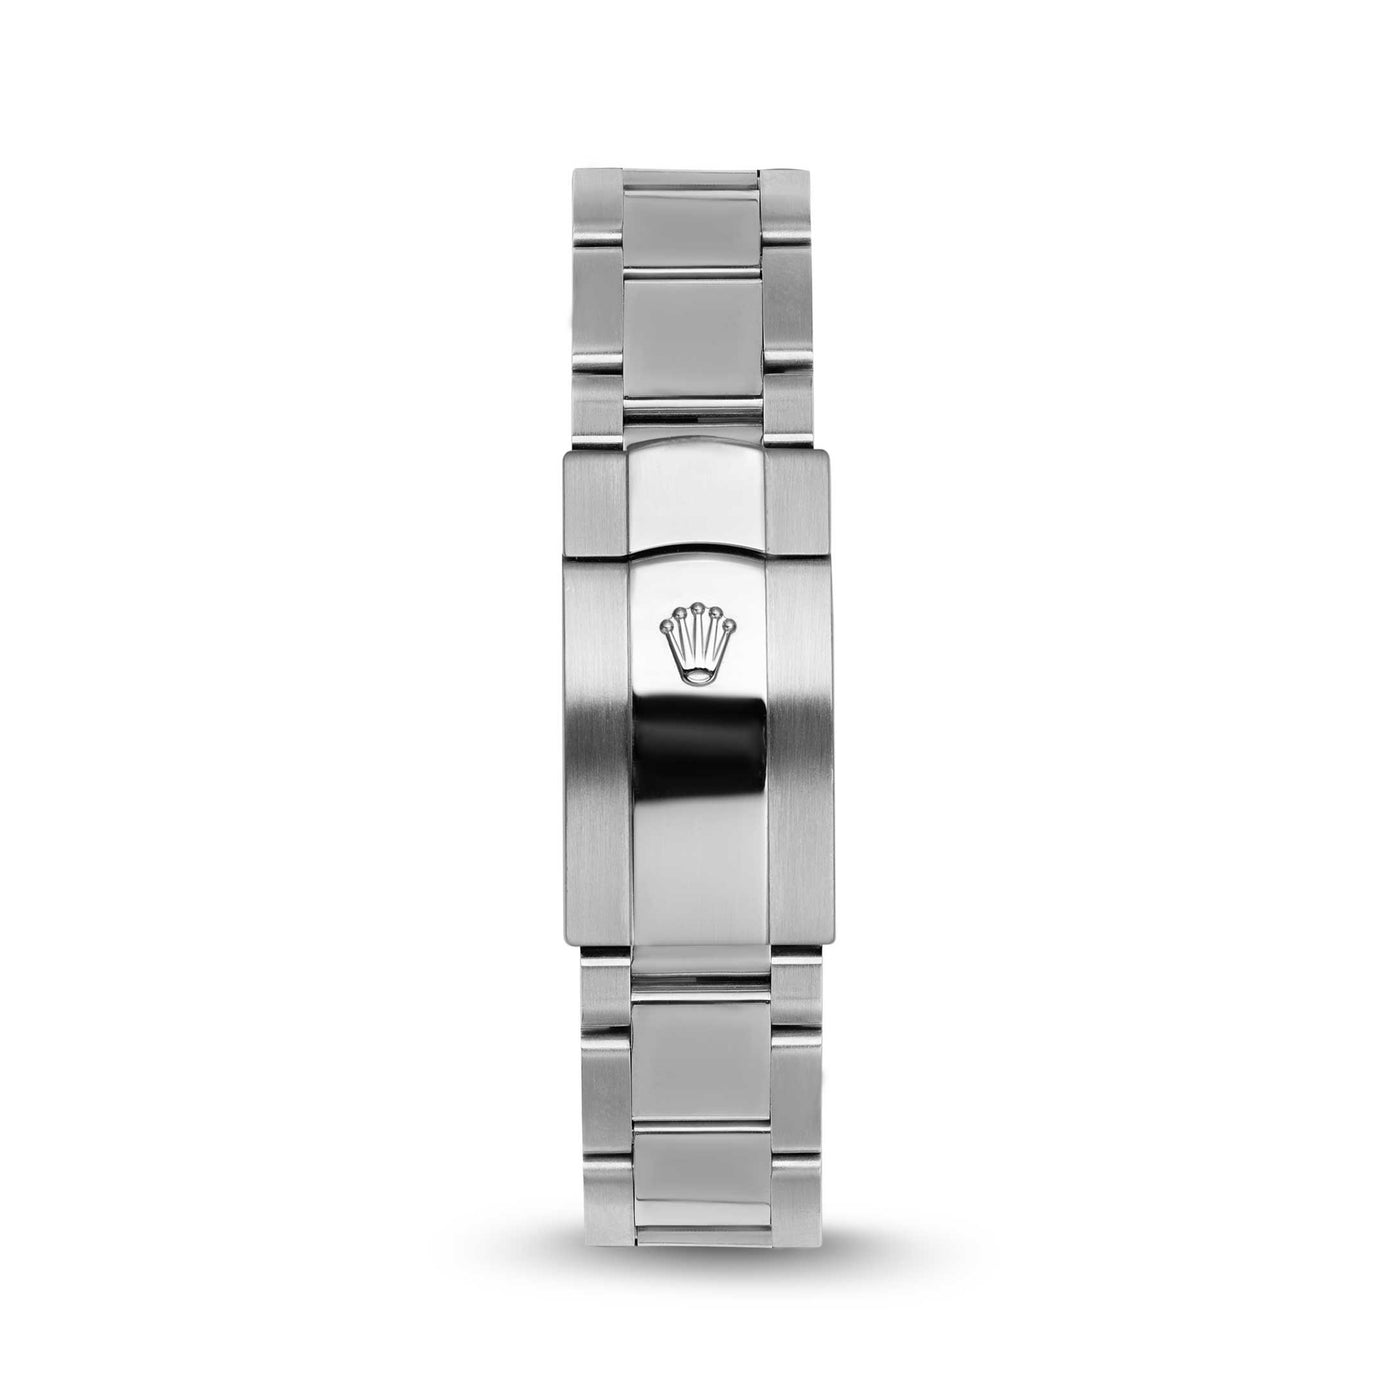 Rolex Datejust Diamond Bezel Watch 41mm Diamond Ice Blue Arabic Dial | 5.15ct